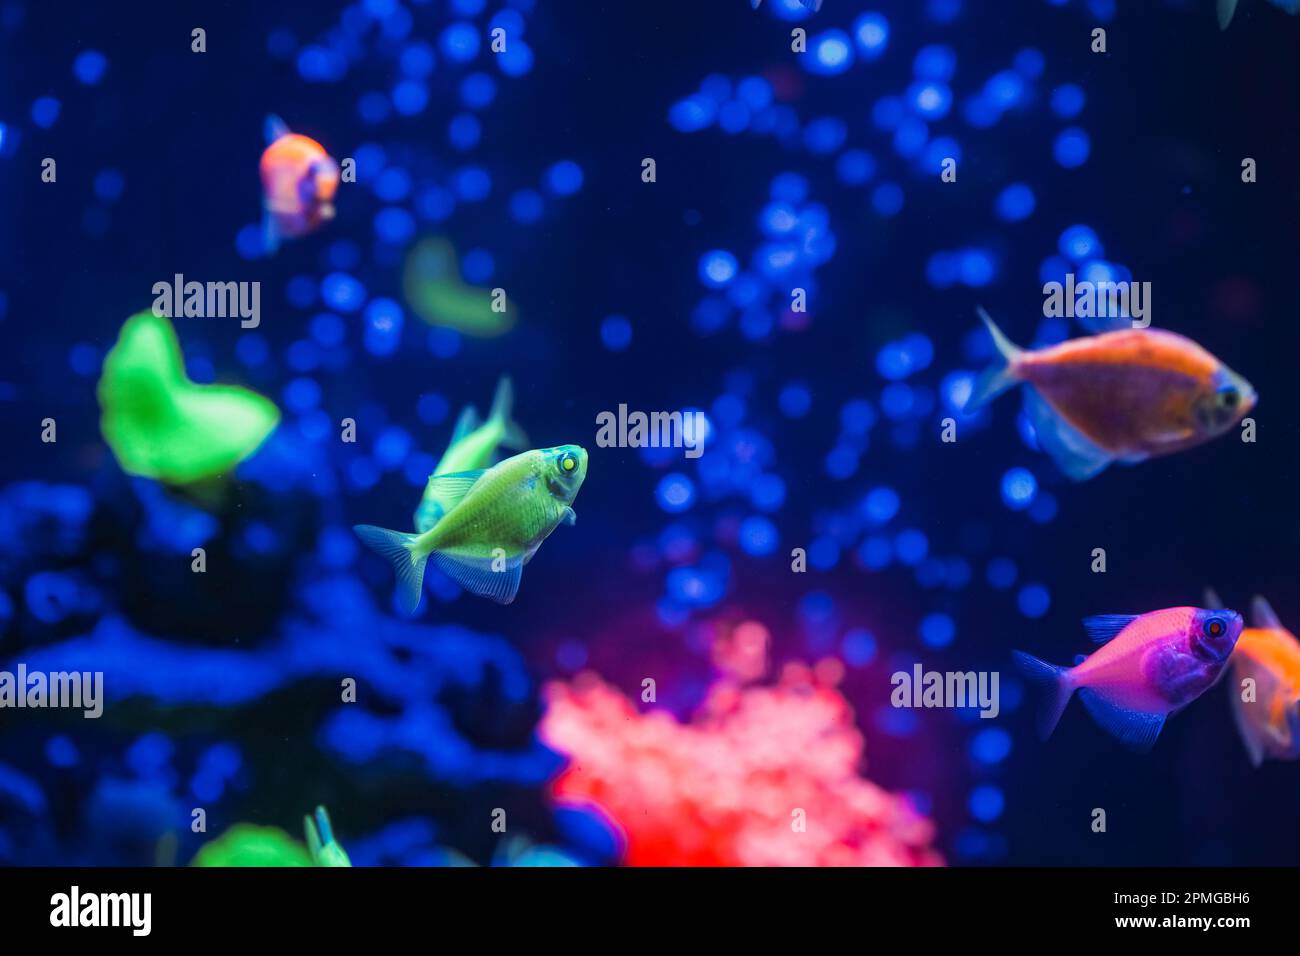 Color & Blurred Aquarium Backgrounds 